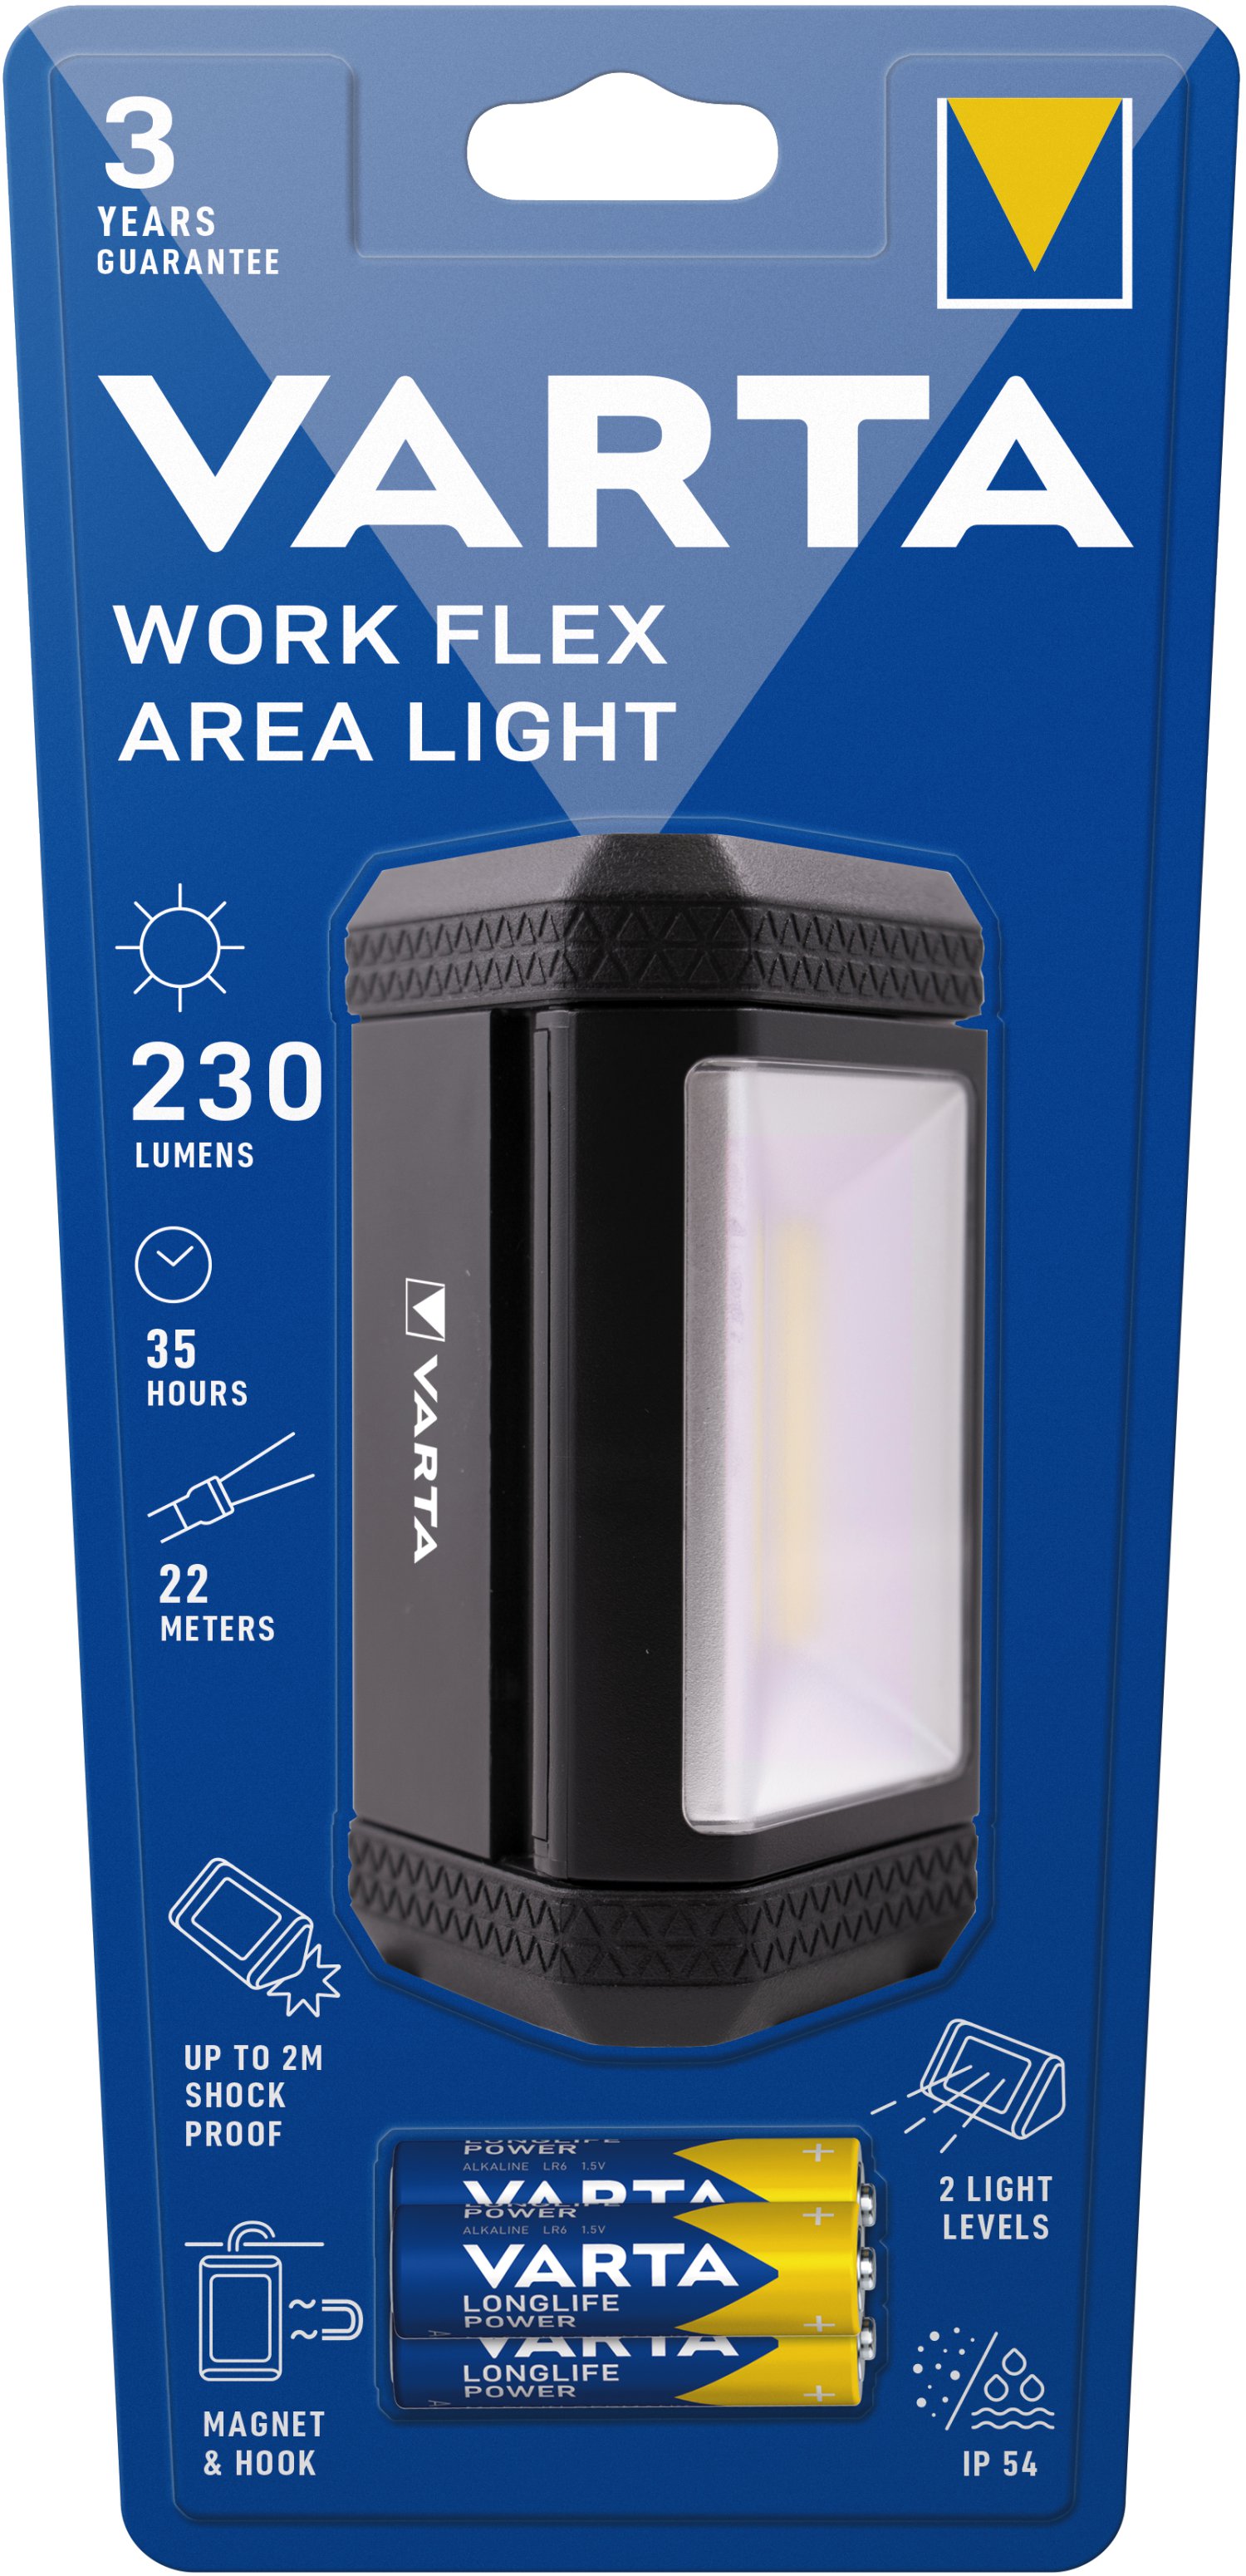 VARTA LED-Arbeitsleuchte Work Flex® Area Light  inkl. 3x VARTA Longlife Power AA Batterien